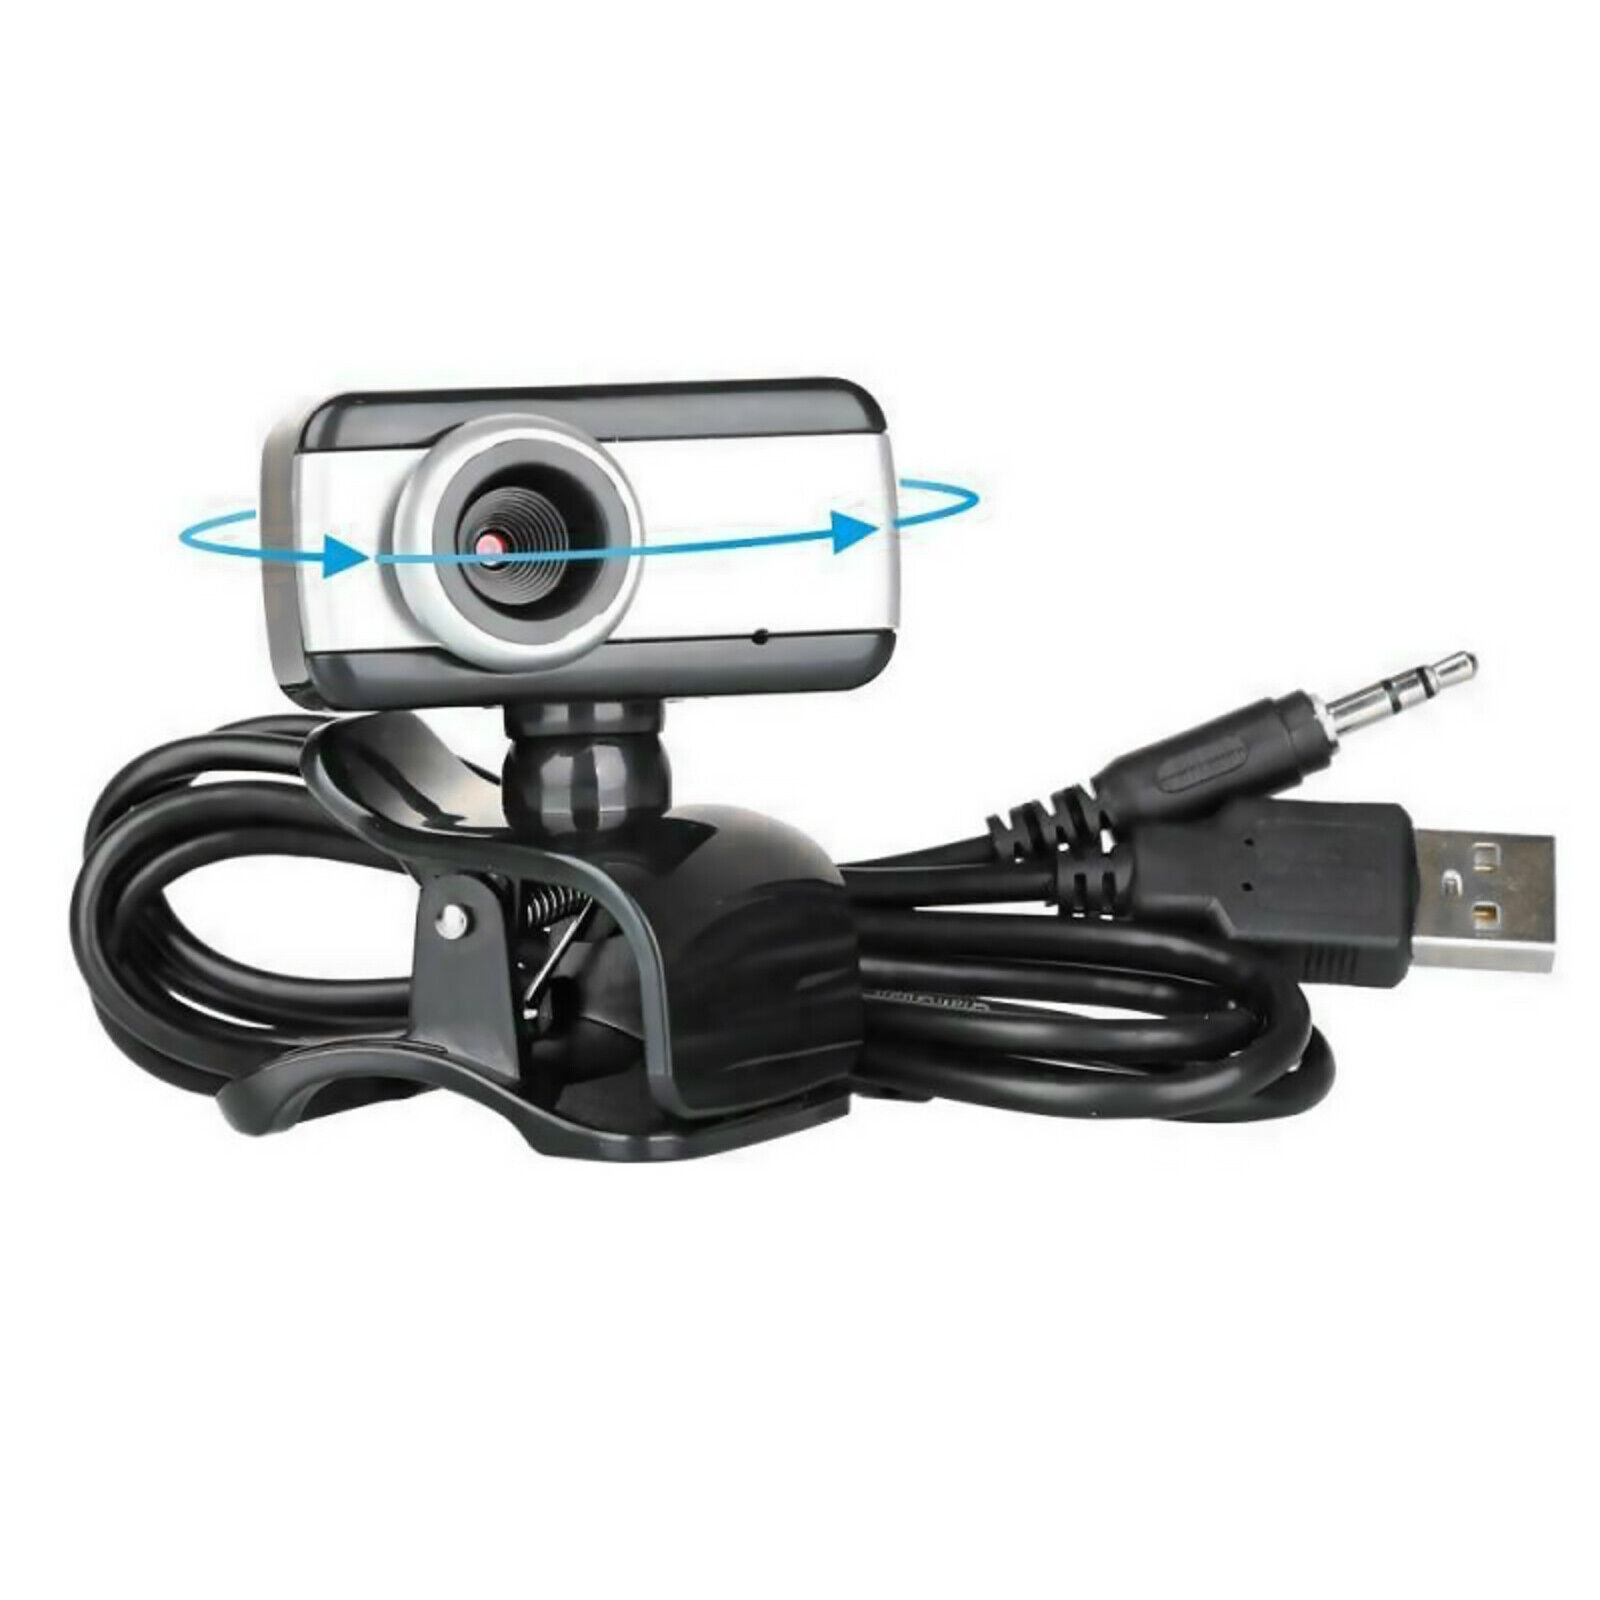 360 Degree Rotation Base 480P Resolution Webcam USB 2.0 Web Camera w/ Microphone